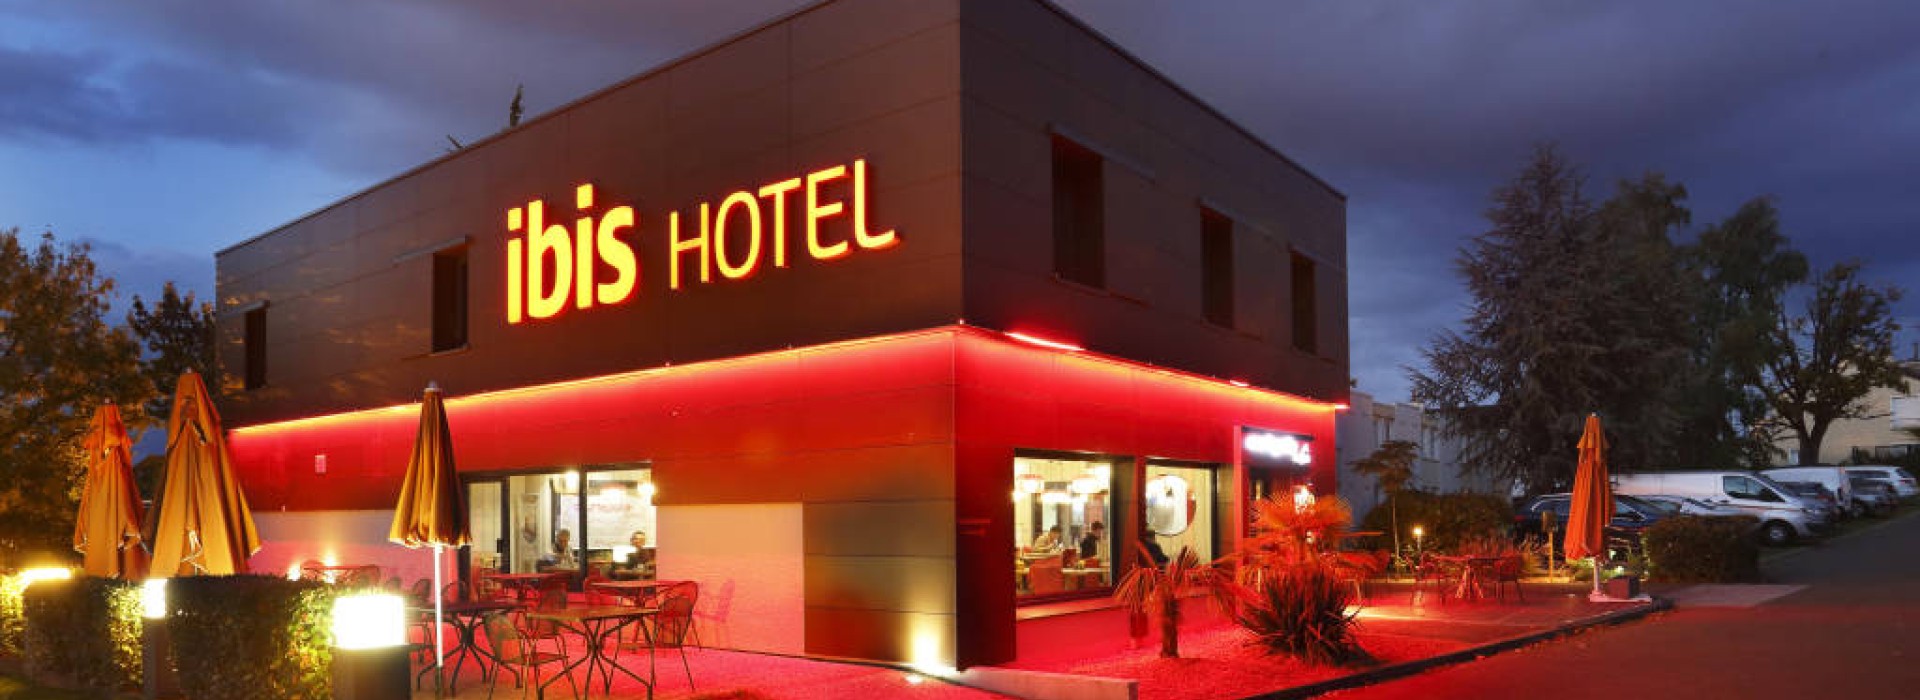 HOTEL RESTAURANT IBIS MANS EST PONTLIEUE  H  tels France  Pays